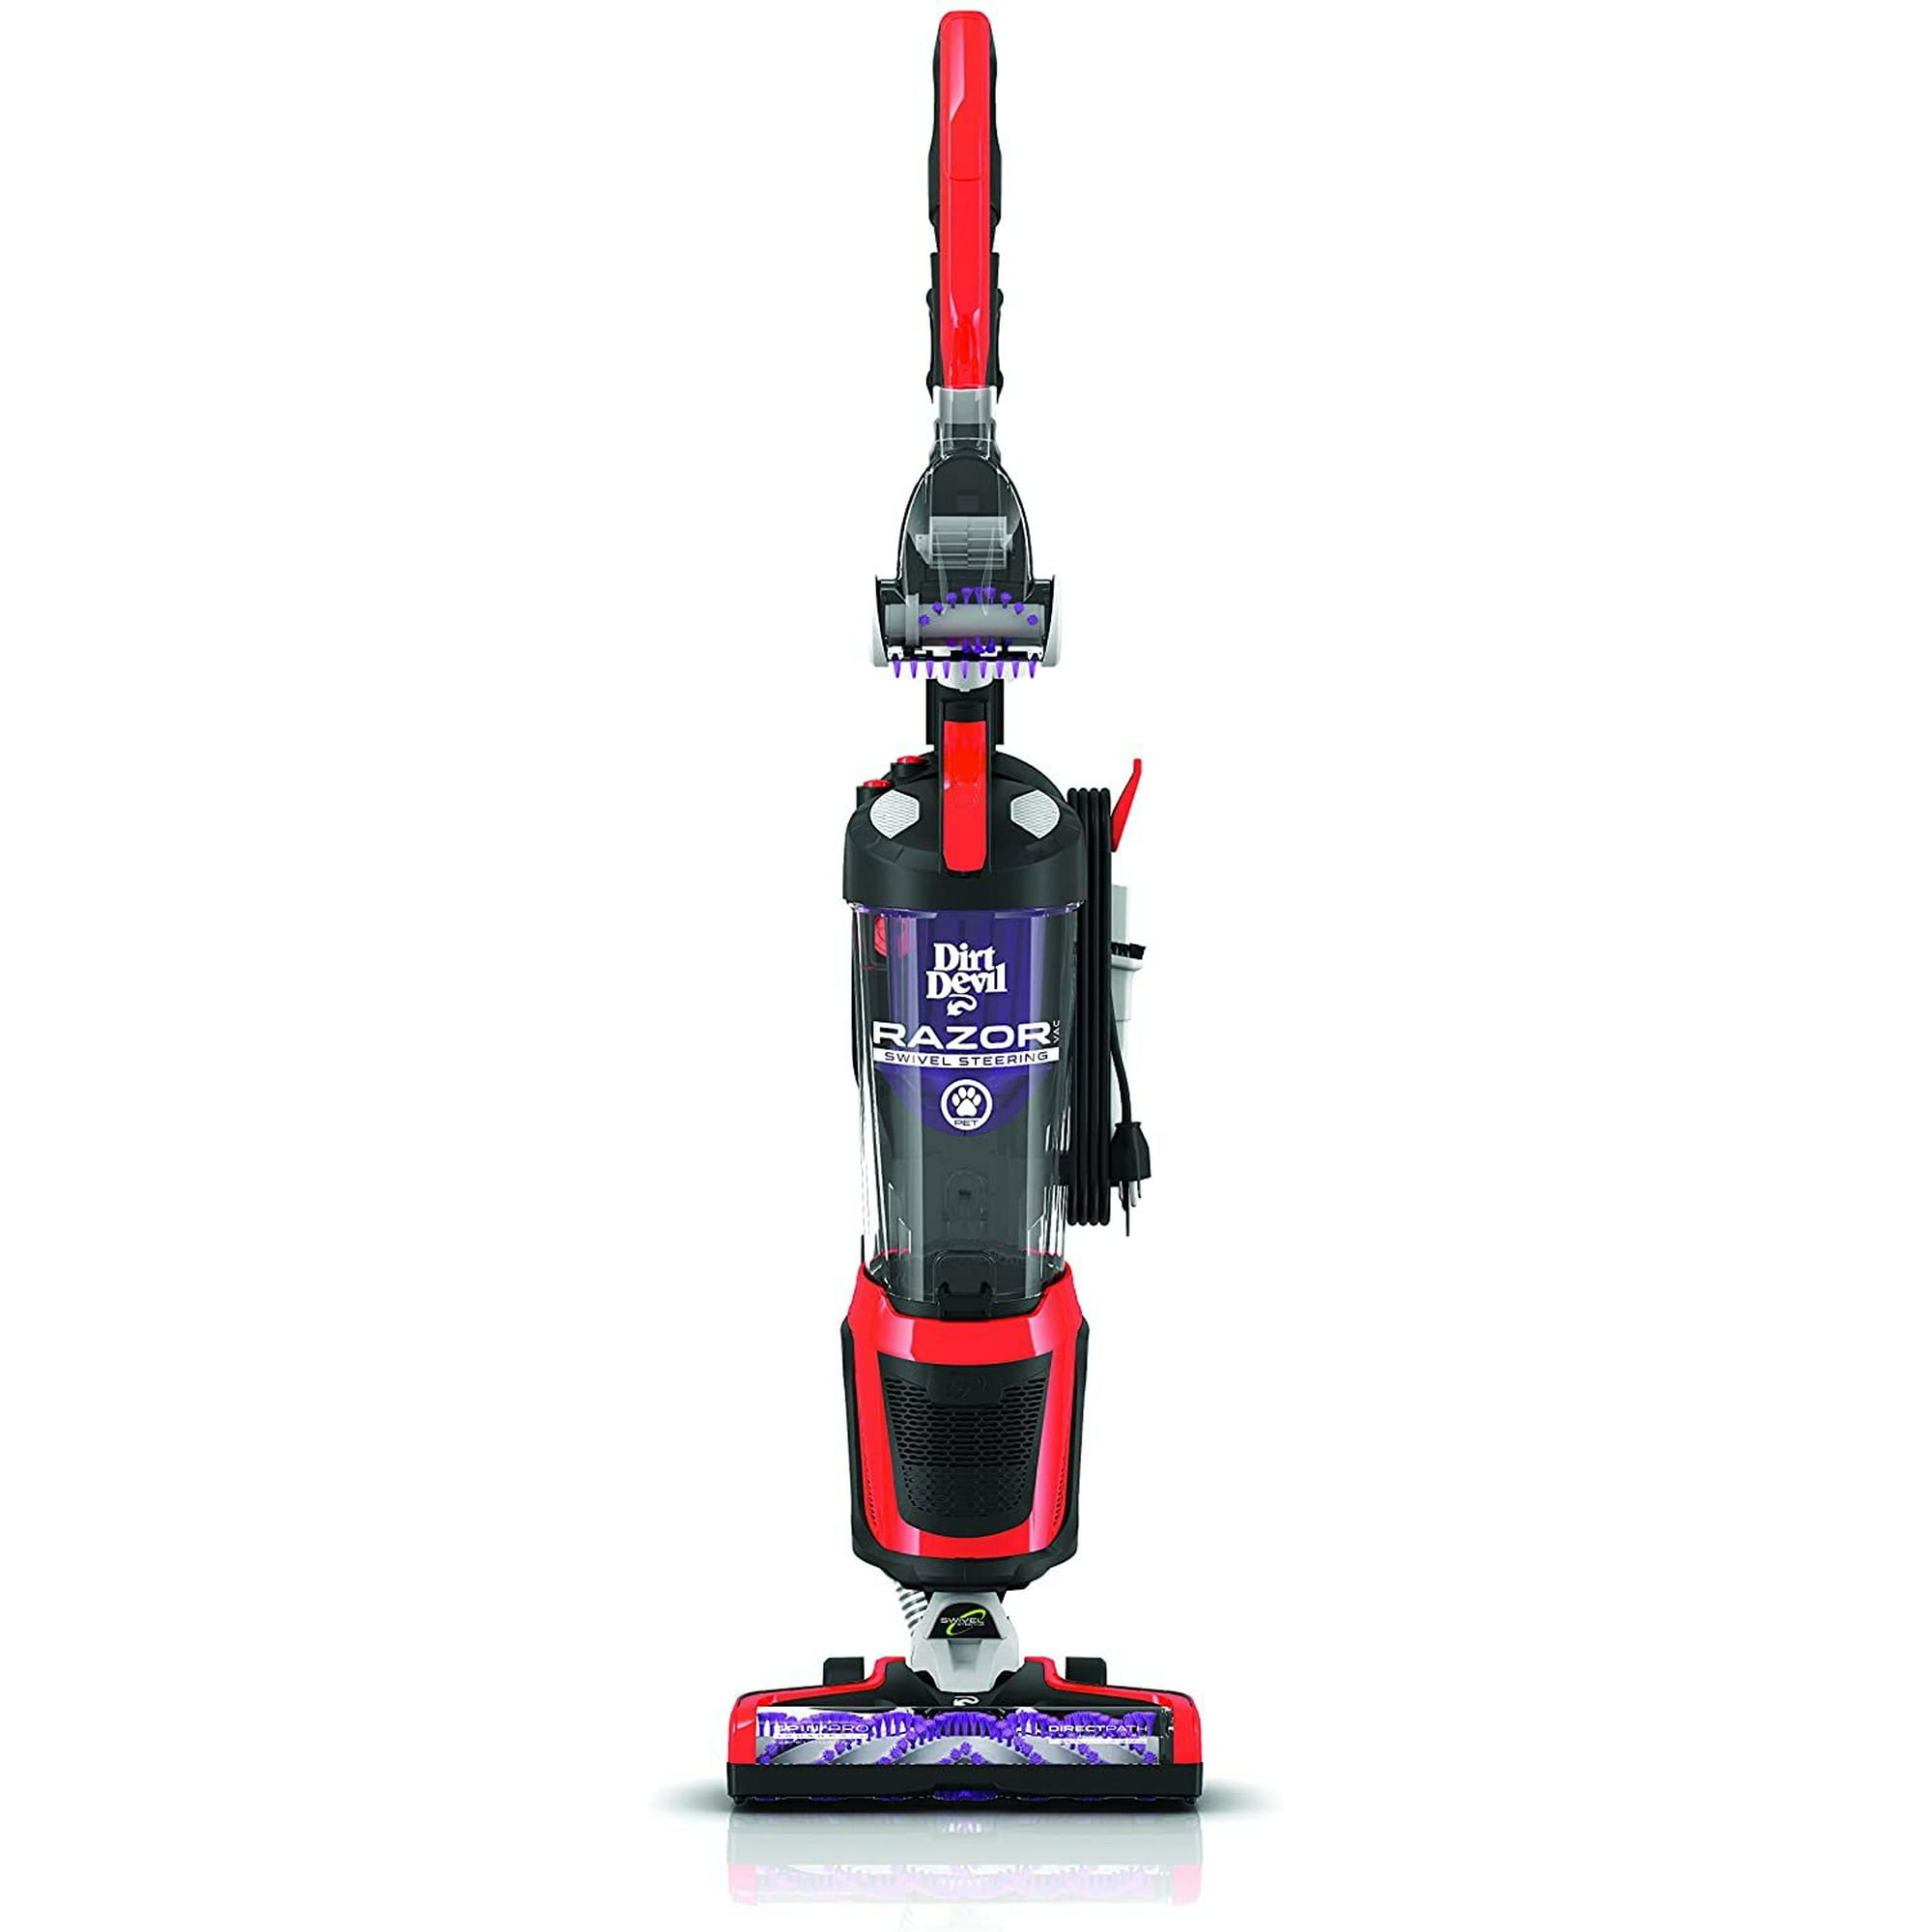 Dirt Devil Razor Pet Bagless Multi Floor Corded Upright Vacuum Cleaner with Swivel Steering